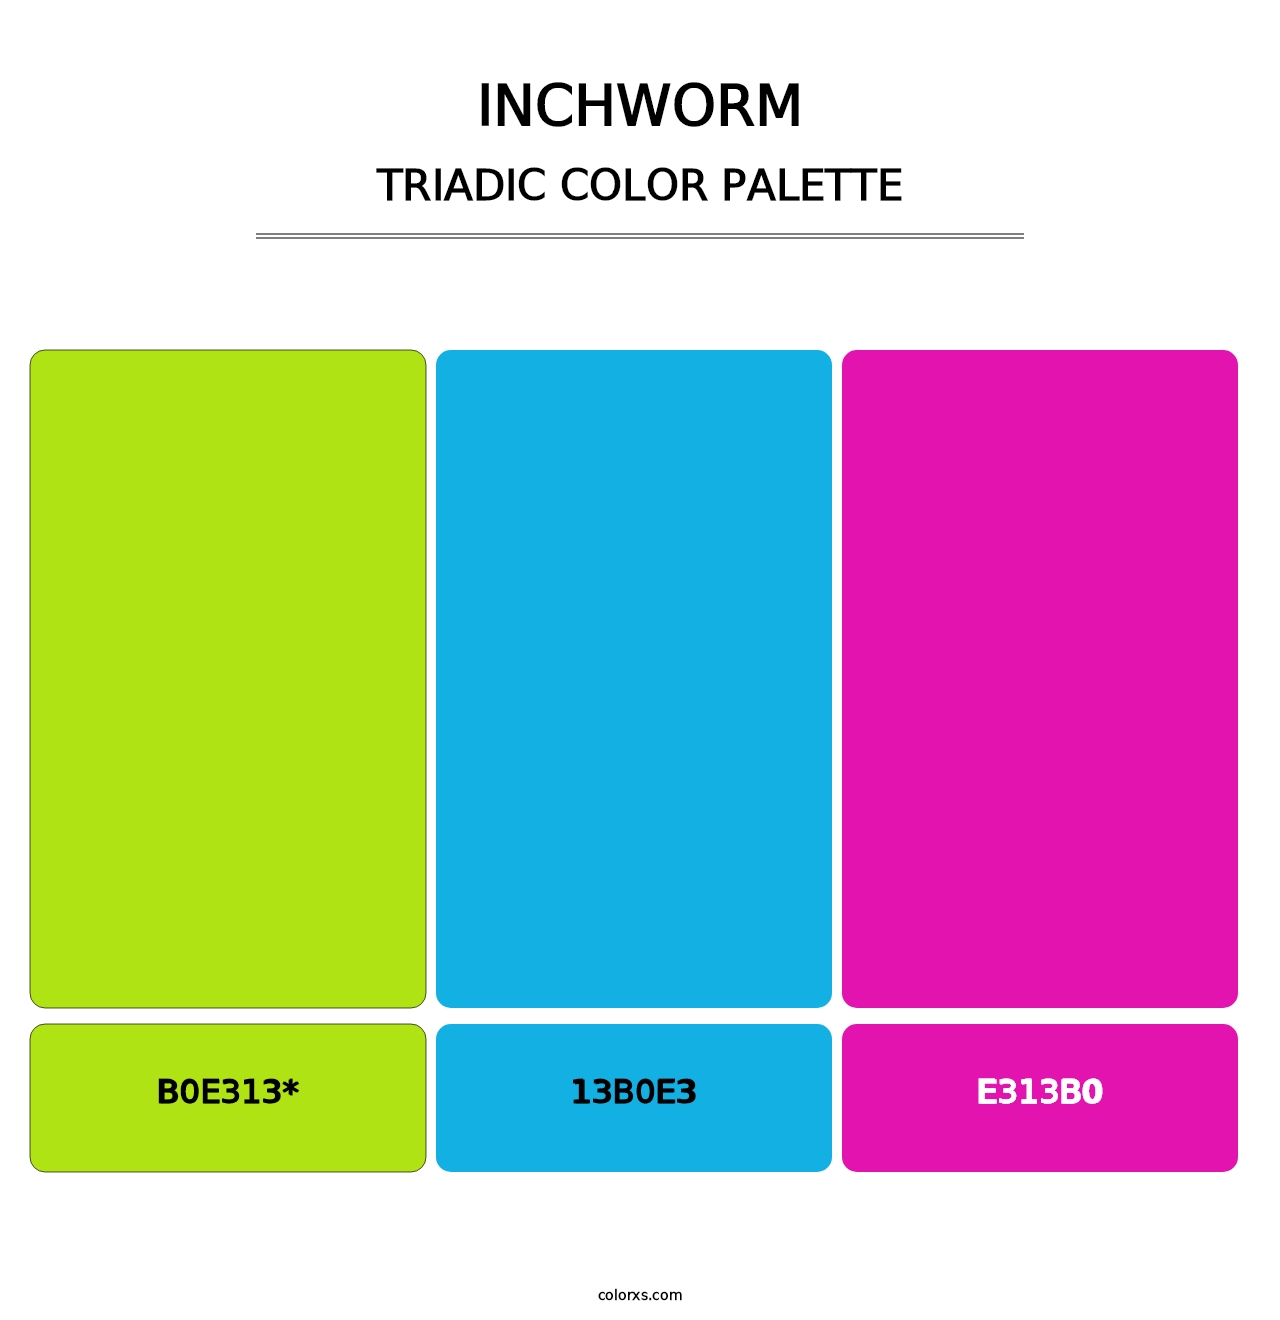 Inchworm - Triadic Color Palette